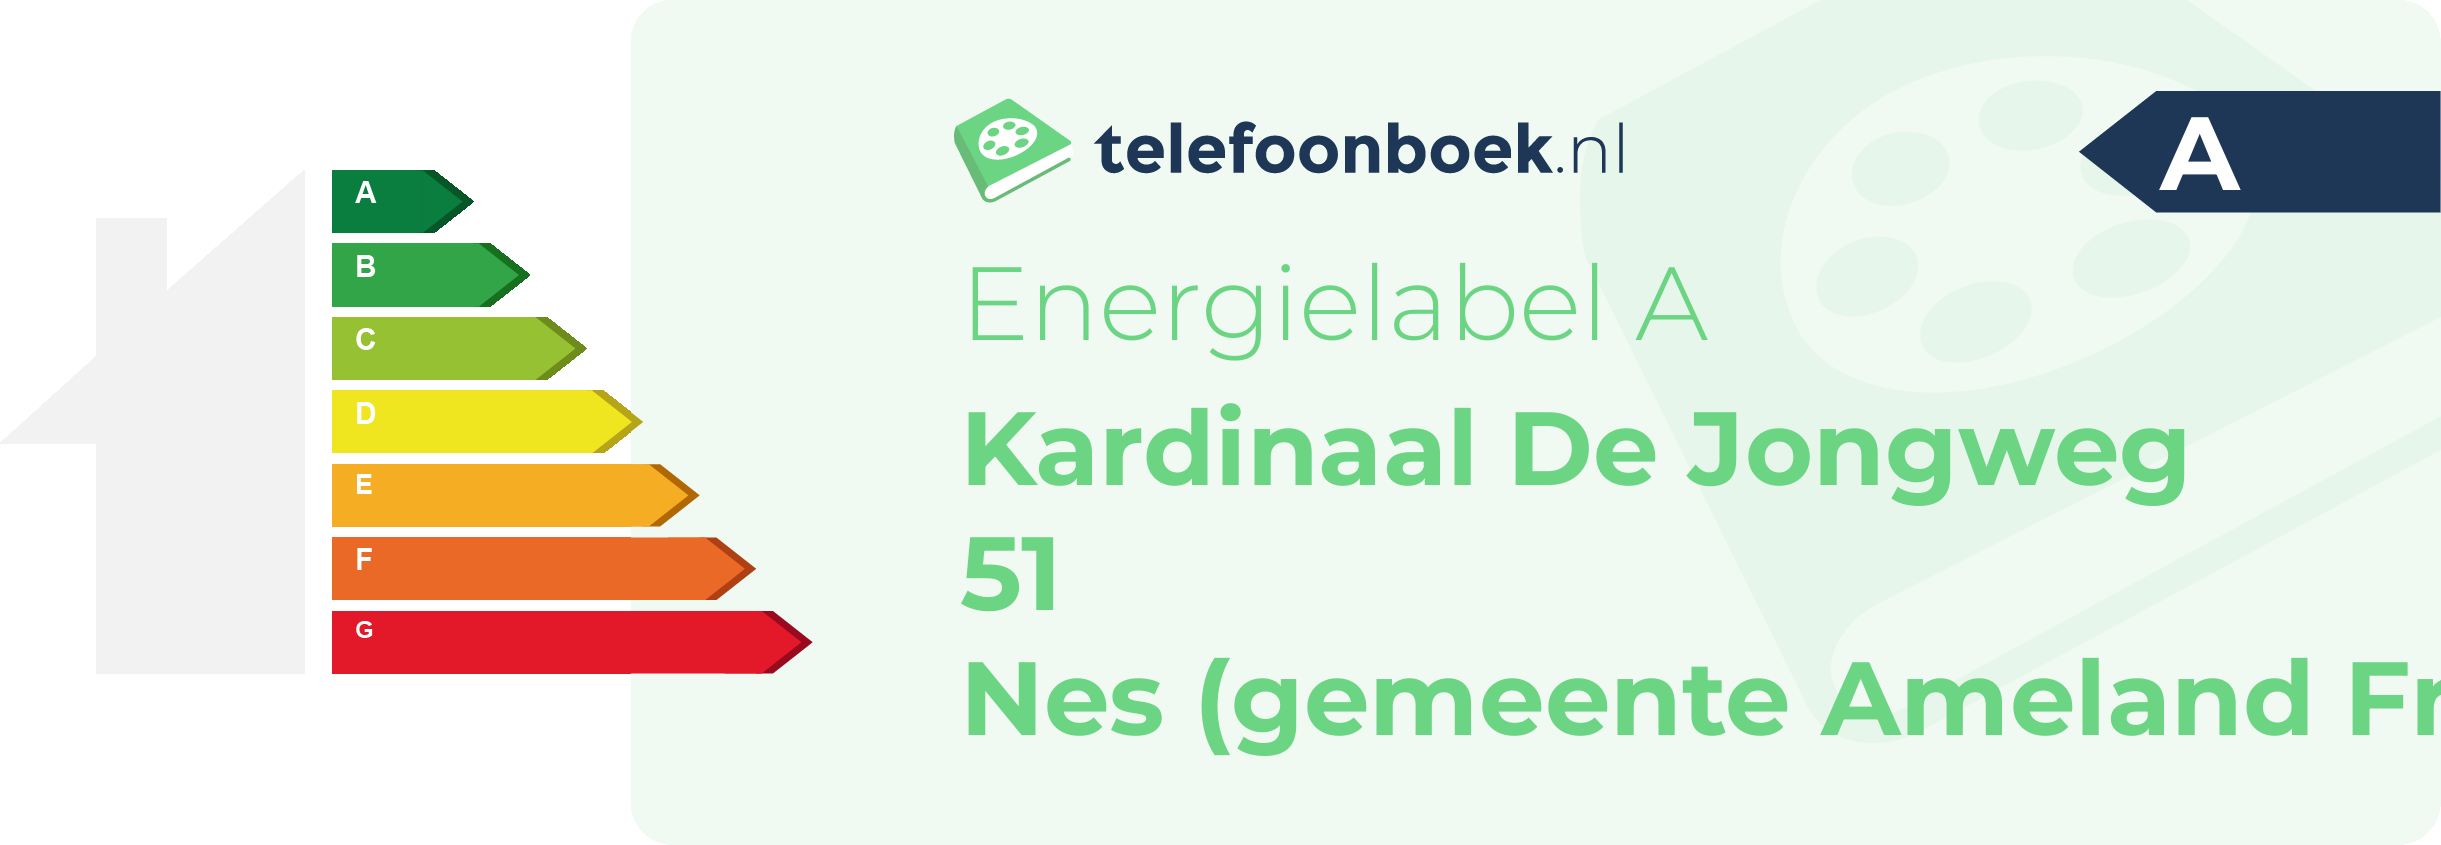 Energielabel Kardinaal De Jongweg 51 Nes (gemeente Ameland Friesland)